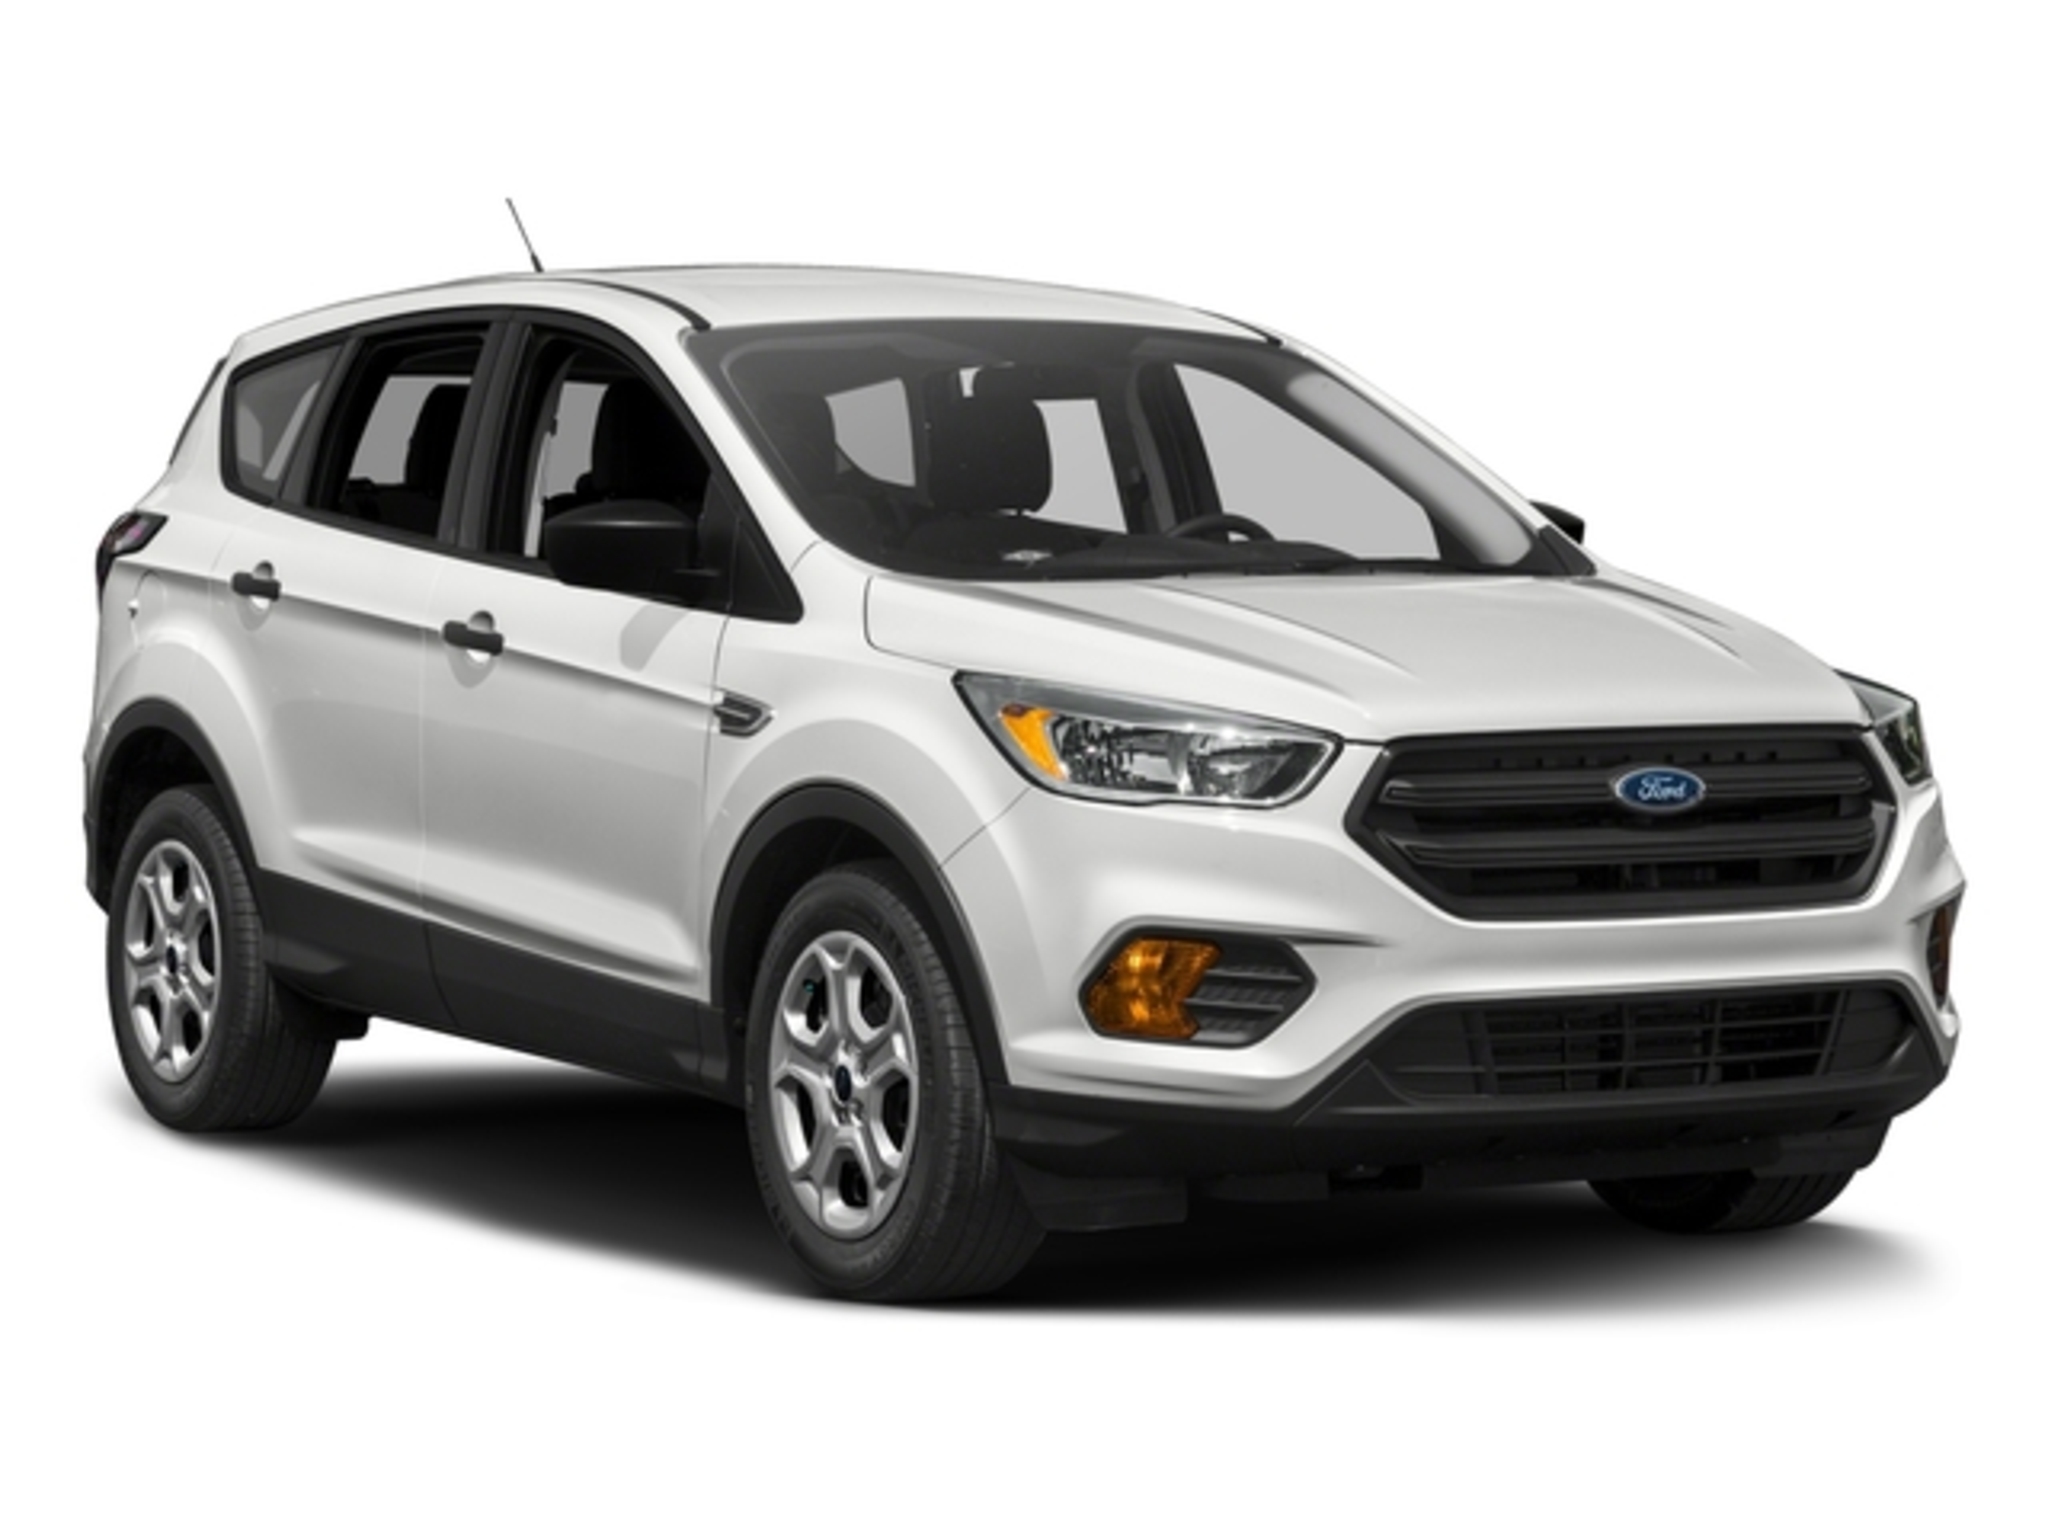 2018 Ford Escape - Compare Prices, Trims, Options, Specs, Photos ...